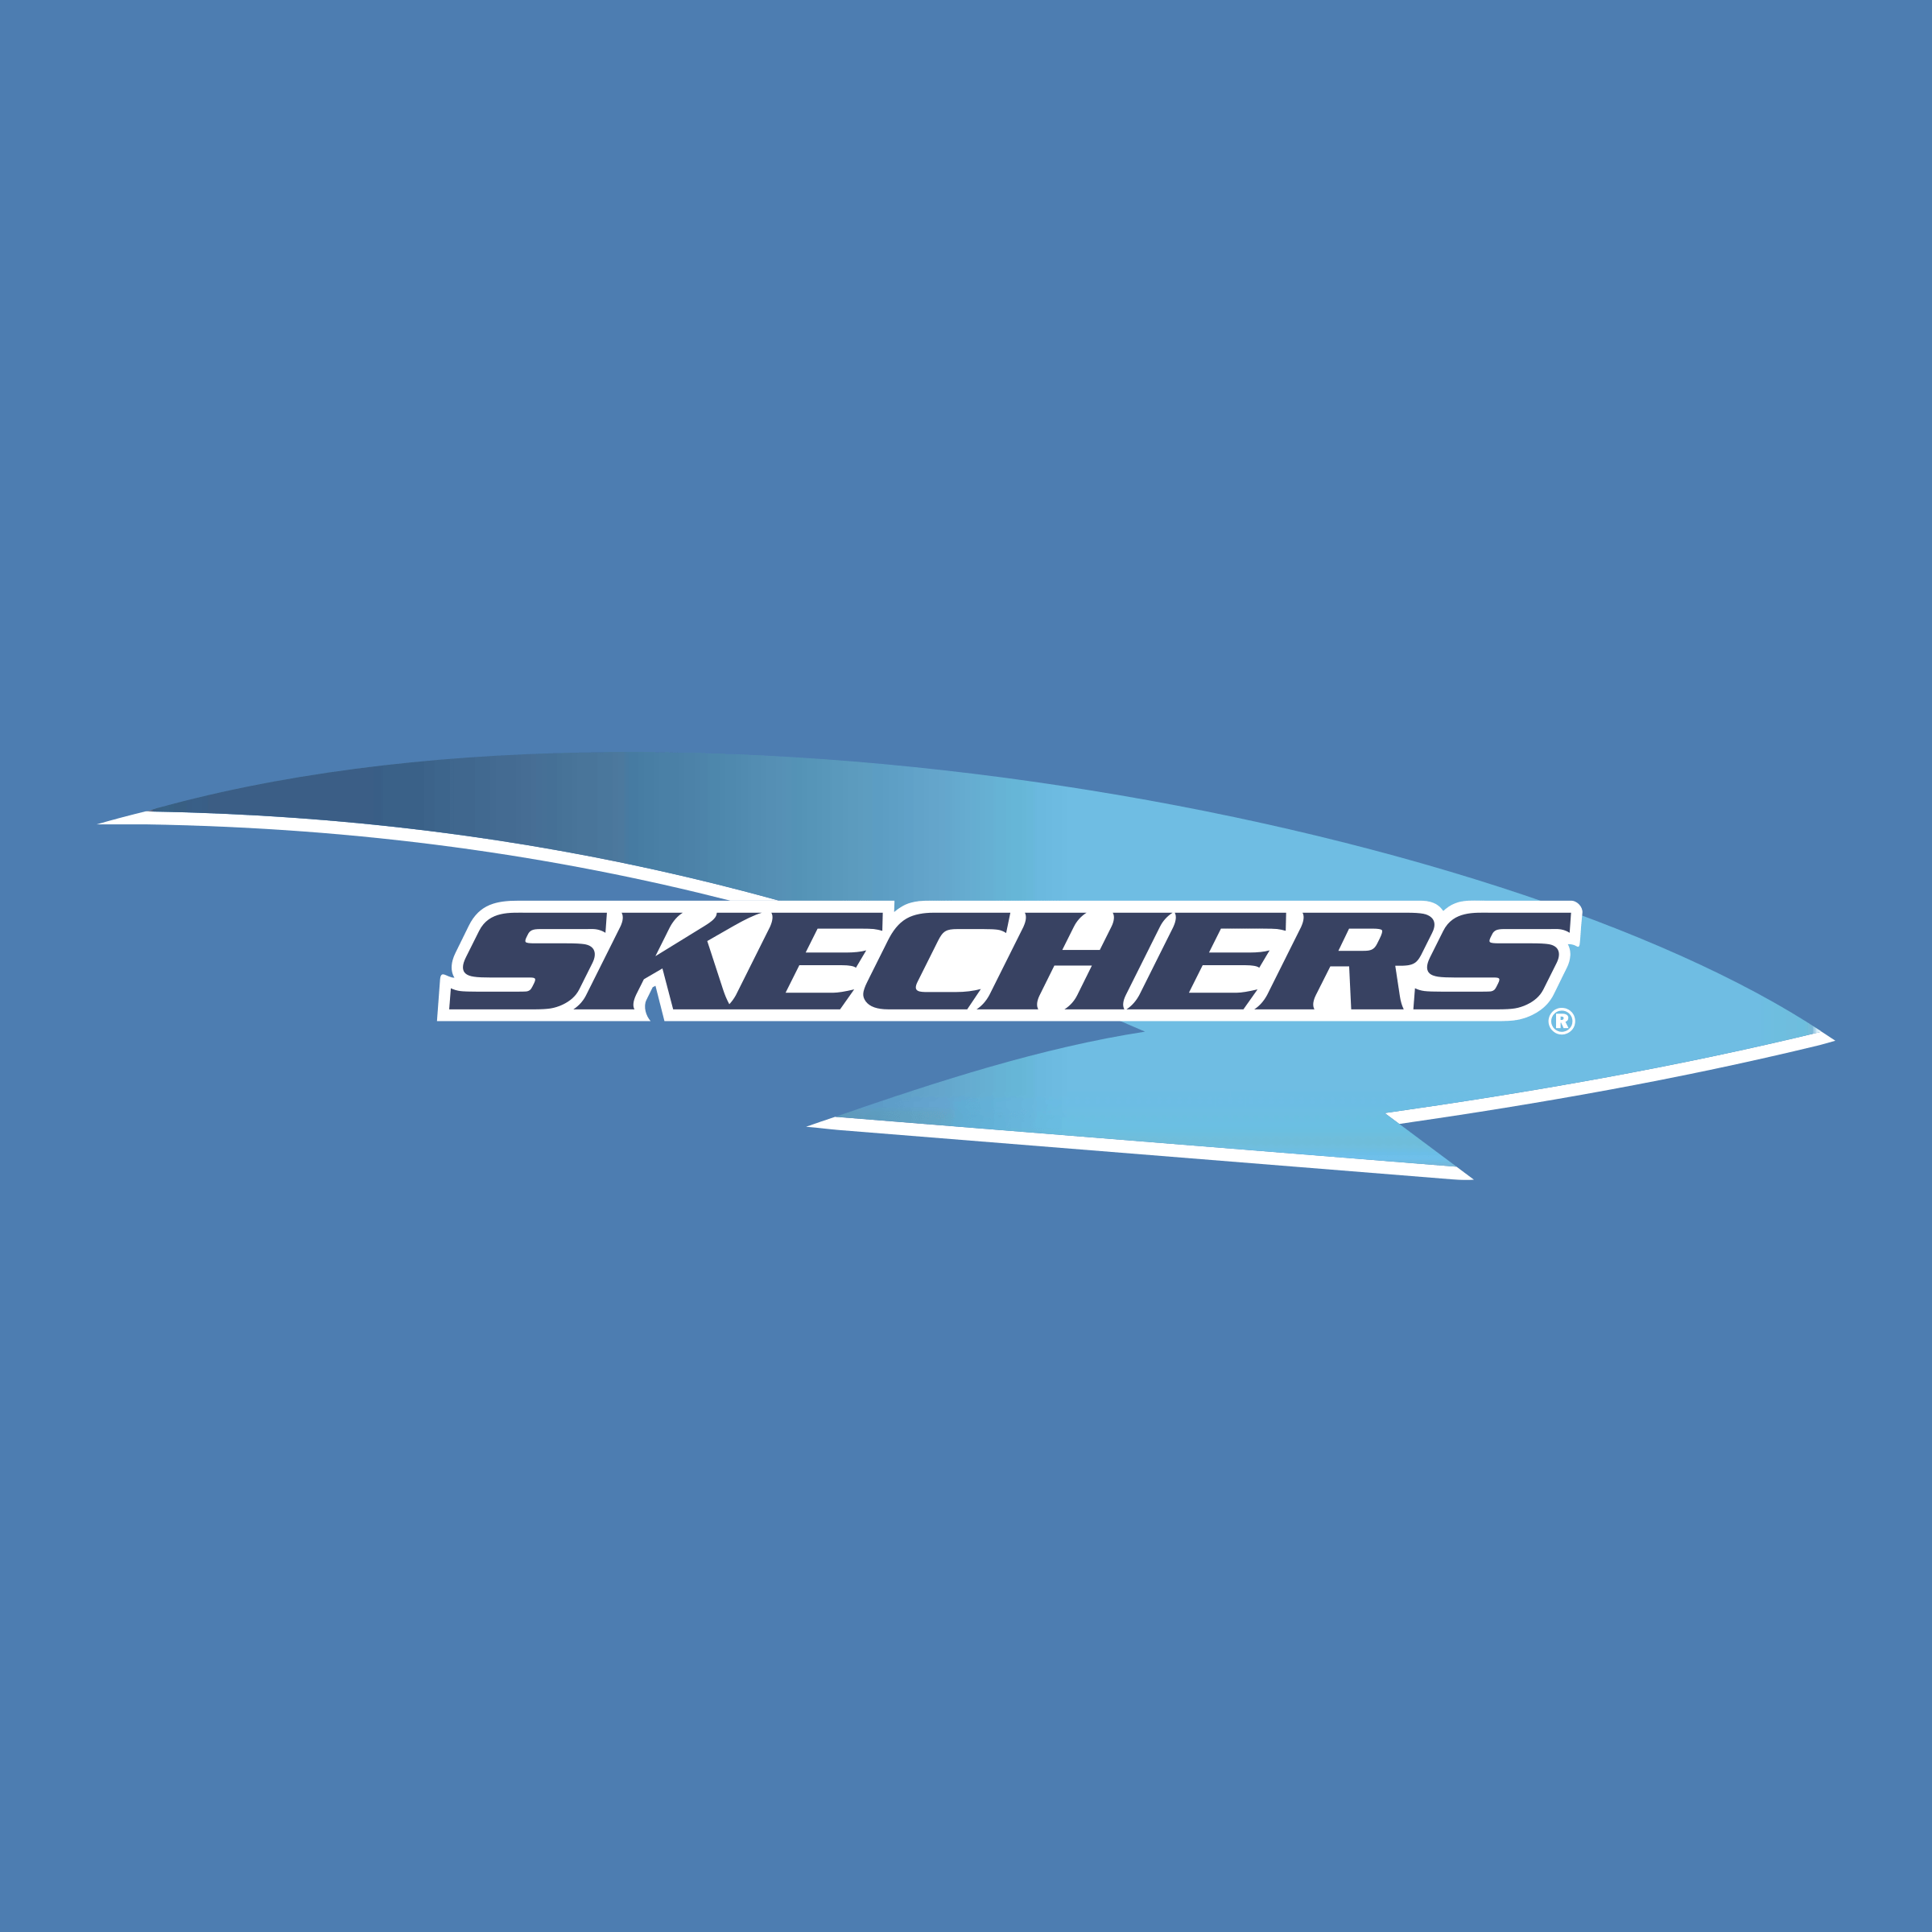 Scechers Logo - Skechers Logo PNG Transparent & SVG Vector - Freebie Supply